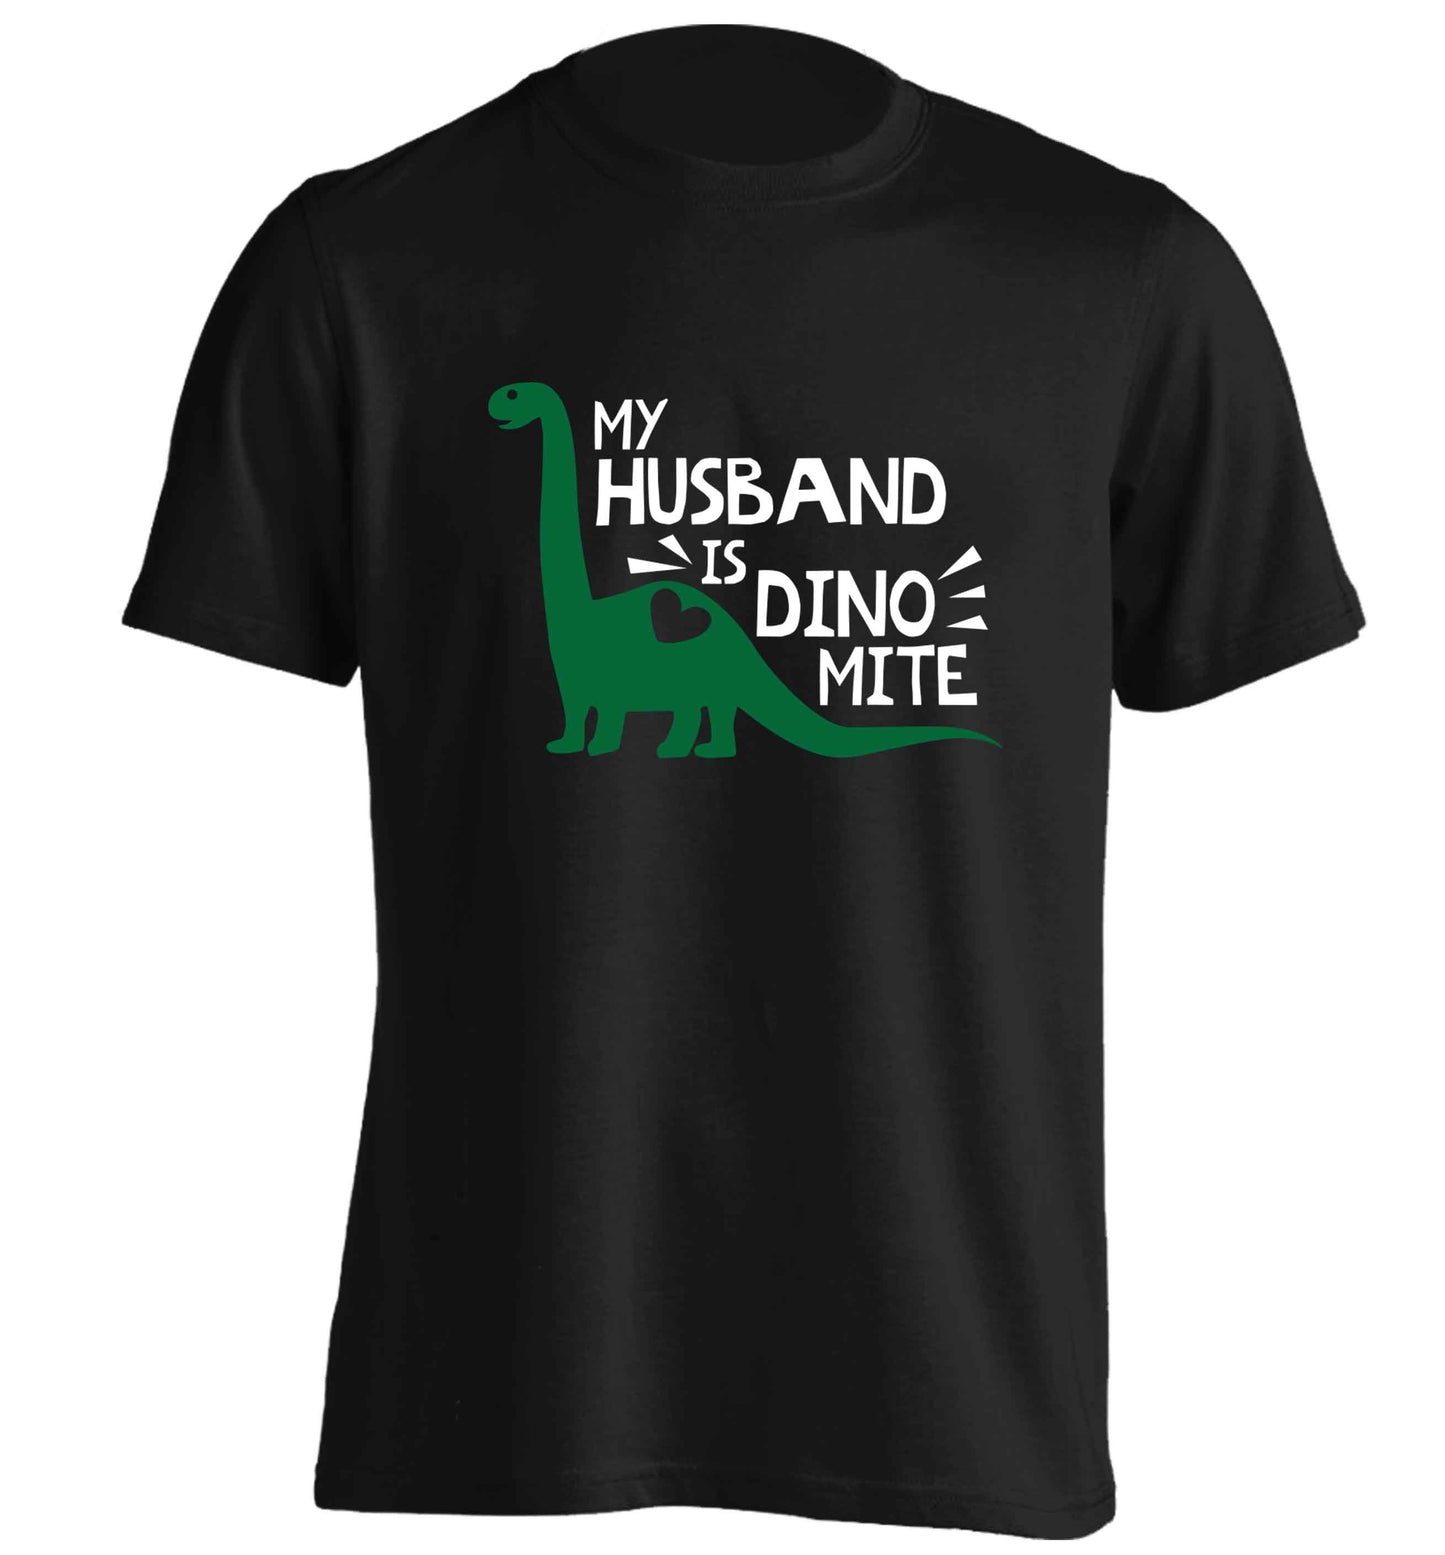 My husband is dinomite! adults unisex black Tshirt 2XL